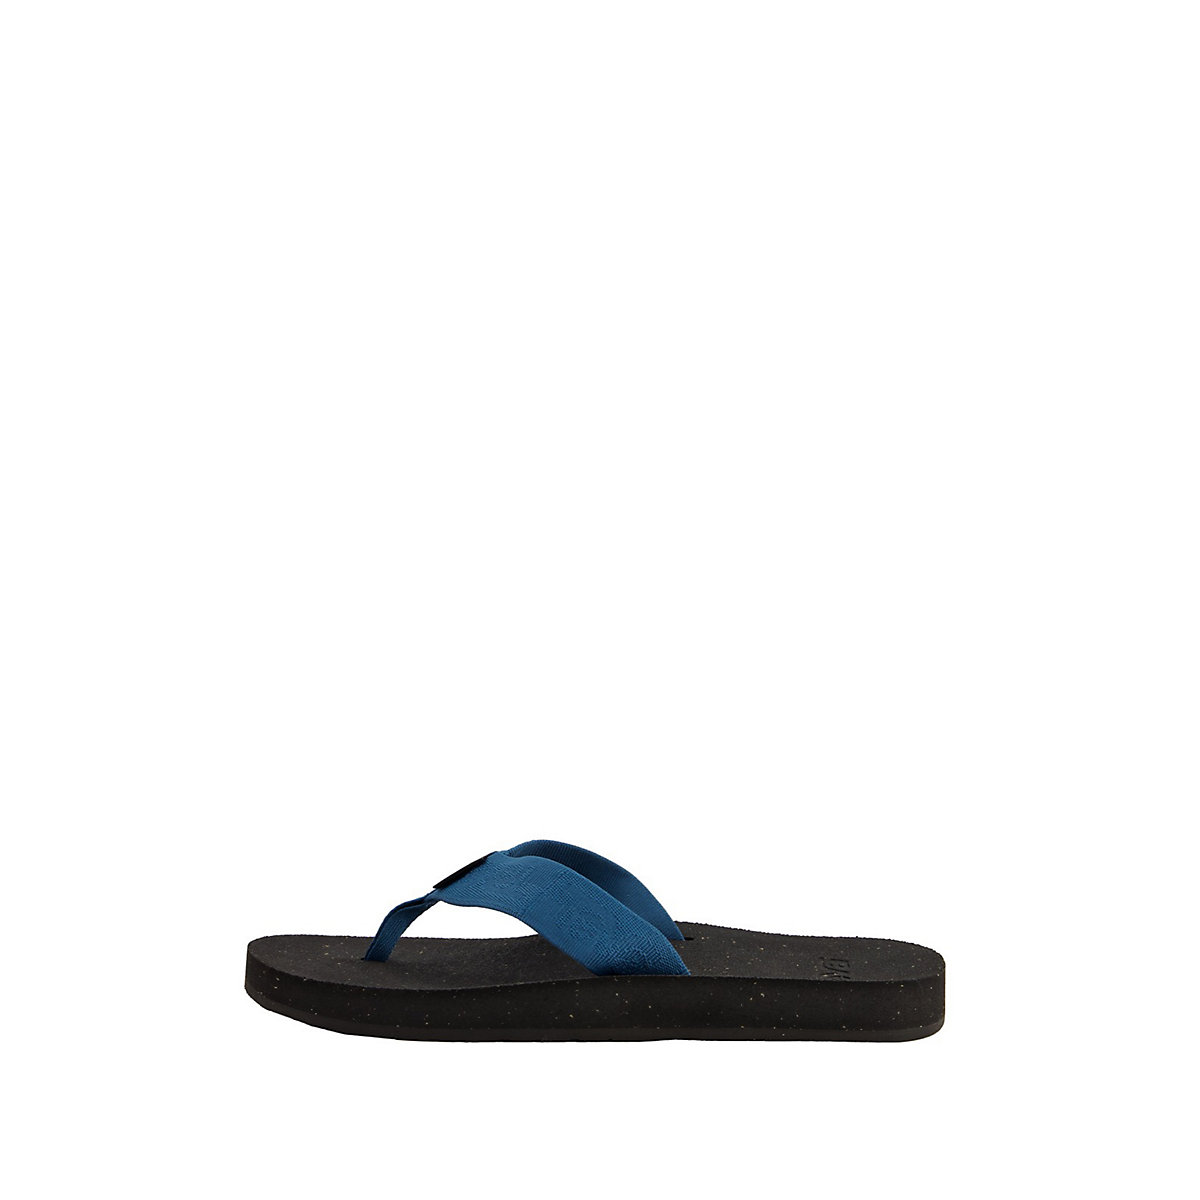 Teva Zehentrenner Sandale Reflip Outdoorsandalen blau/schwarz